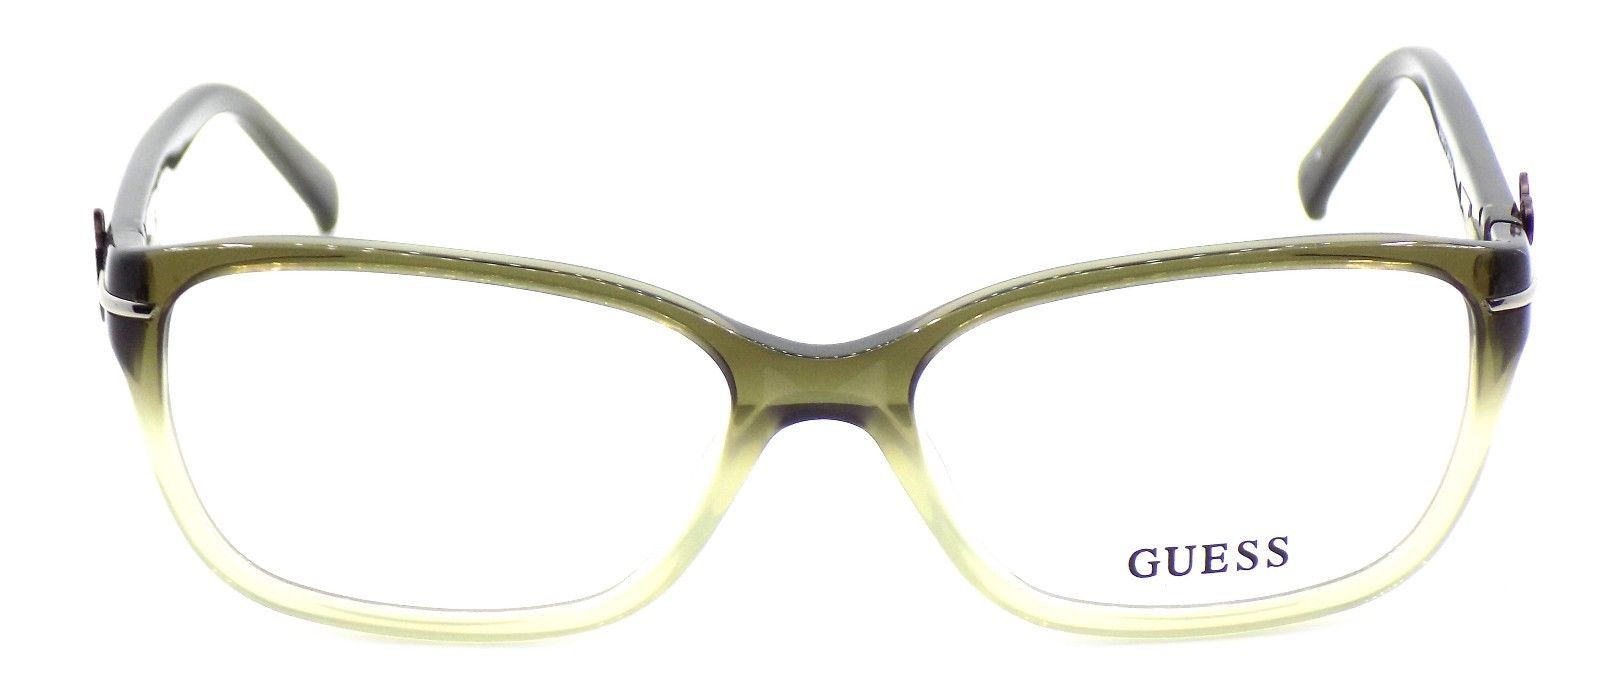 2-GUESS GU2303 OL Women's Eyeglasses Frames 56-16-135 Olive + CASE-715583528352-IKSpecs